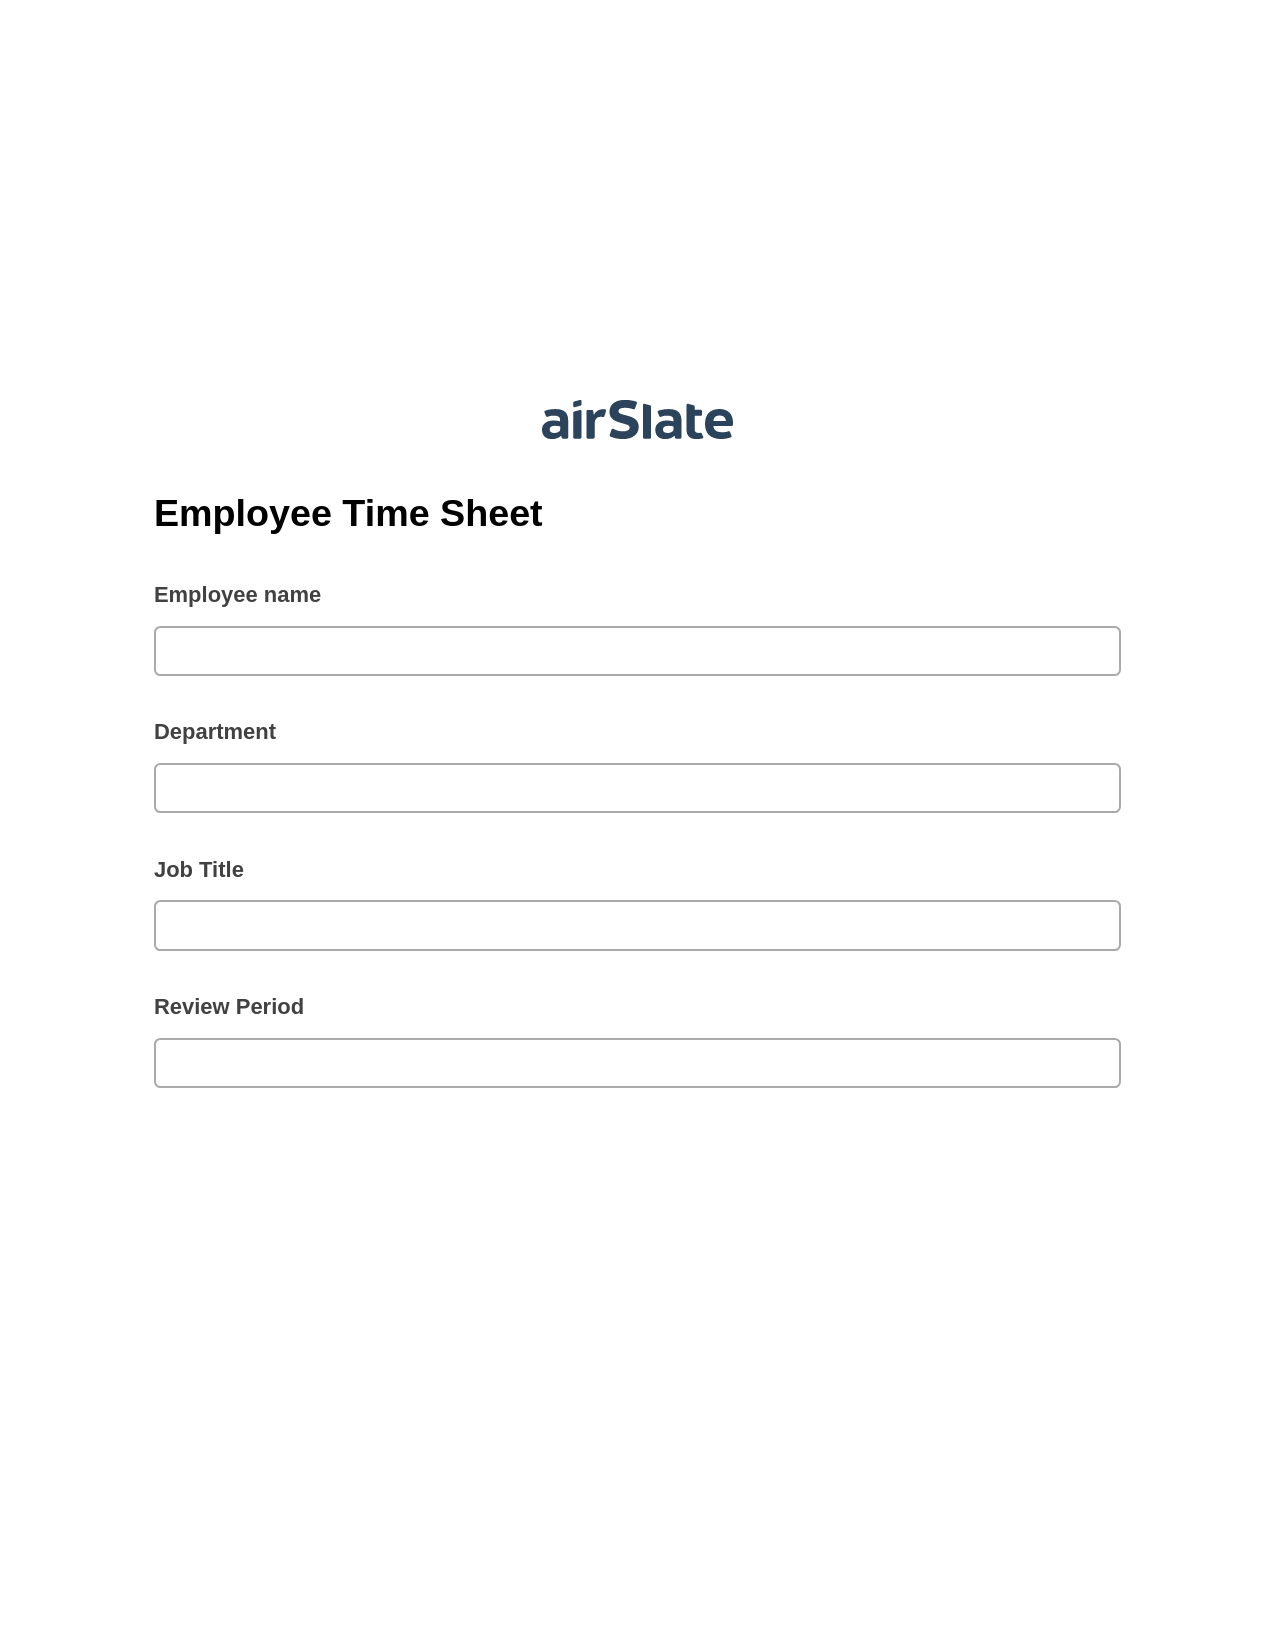 Multirole Employee Time Sheet Pre-fill from Google Sheets Bot, Create slate addon, Archive to Dropbox Bot